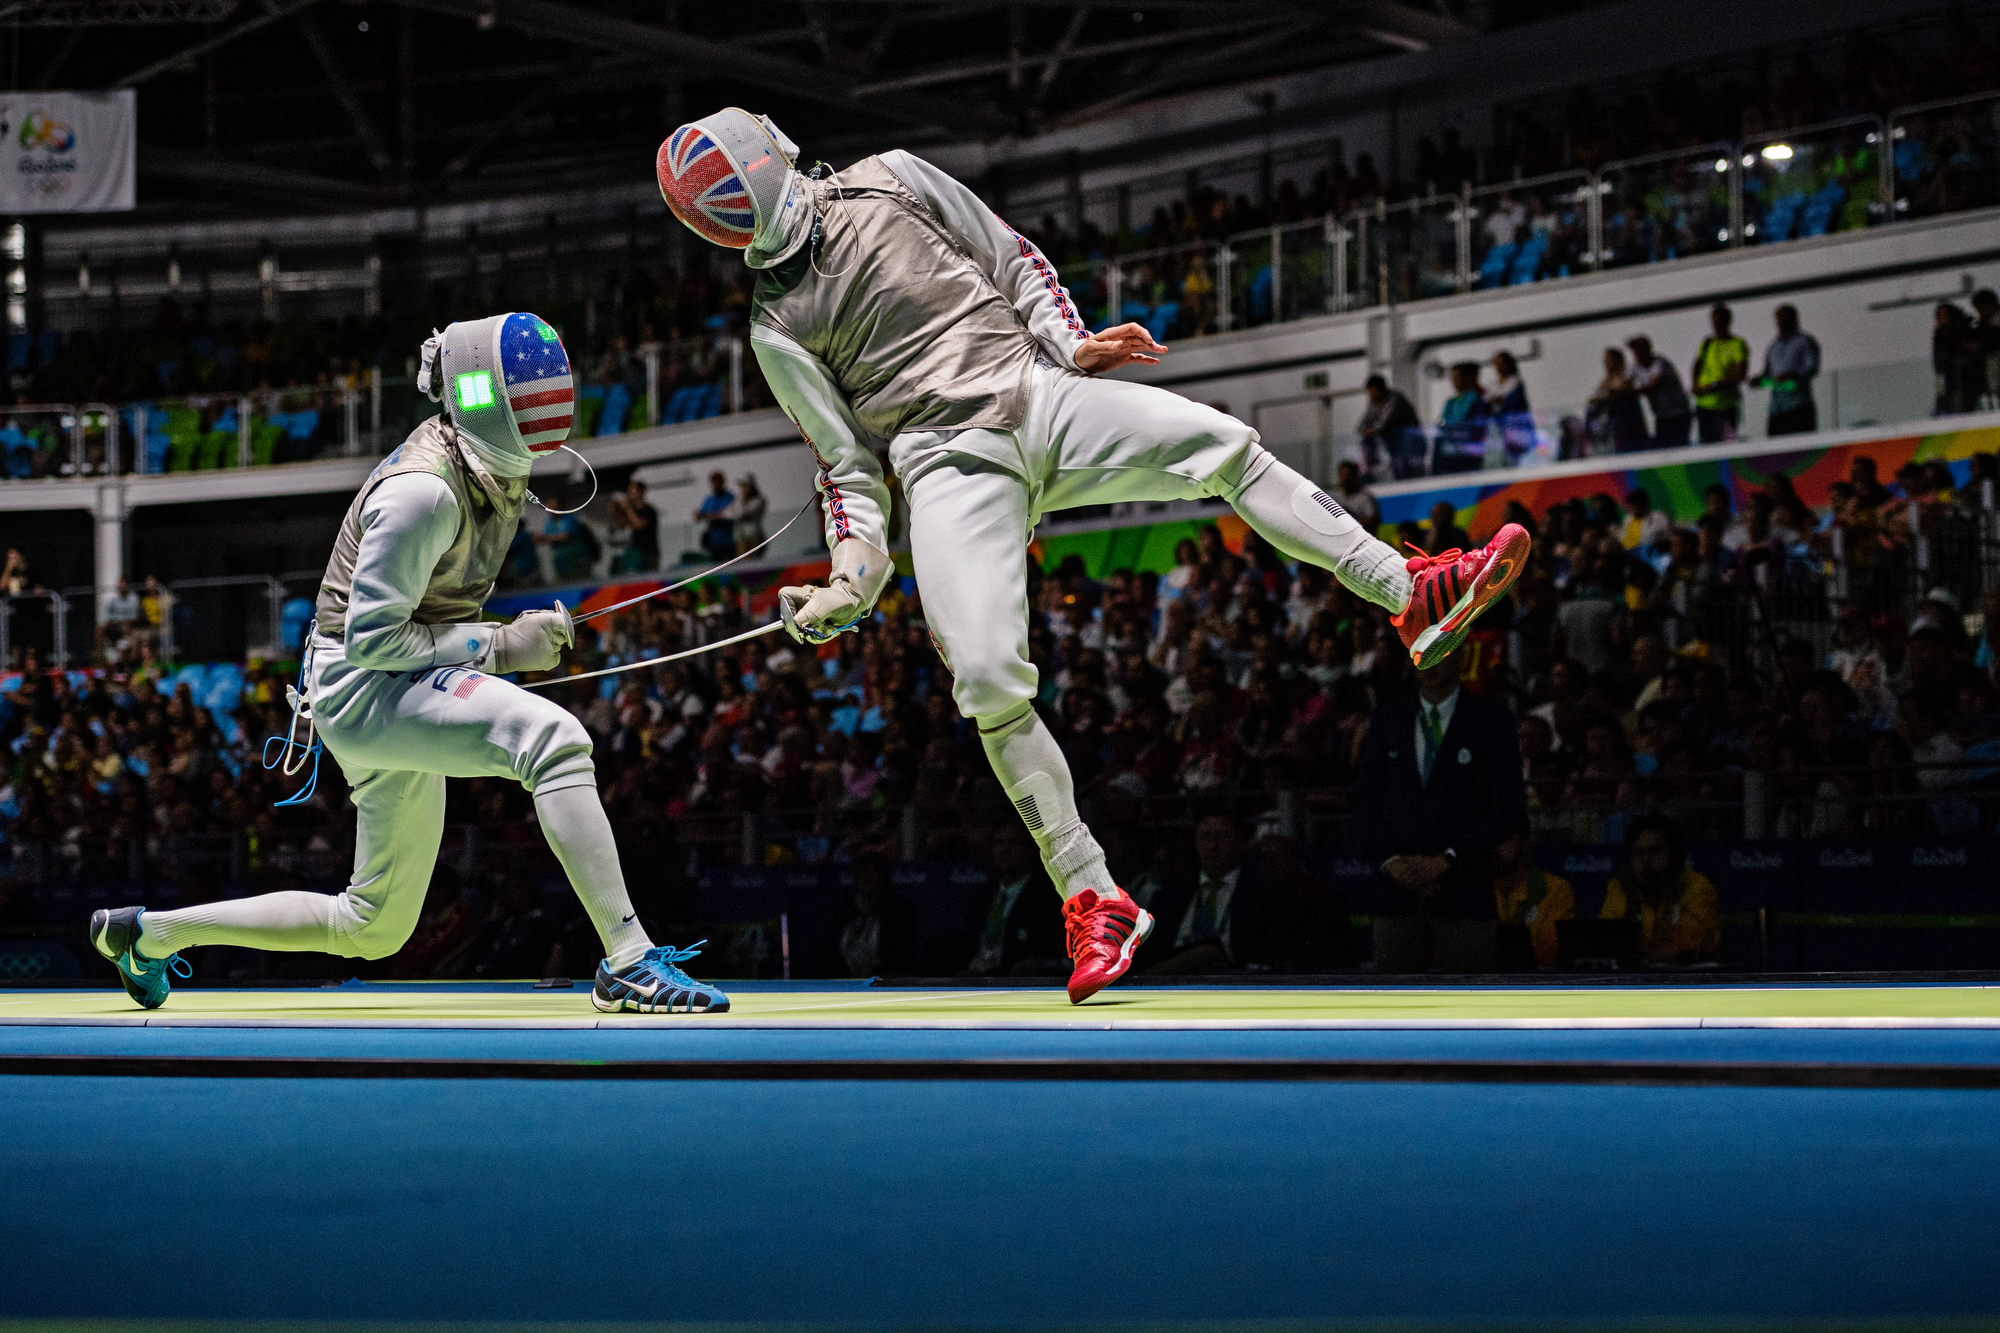 Rio 2016 Summer Olympic Games - Day 2 Fencing - Men's Foil Individual Carioca Arena 3/Rio de Janeiro Brazil 08/07/2016 SI-104 TK1 Credit: Joe McNally